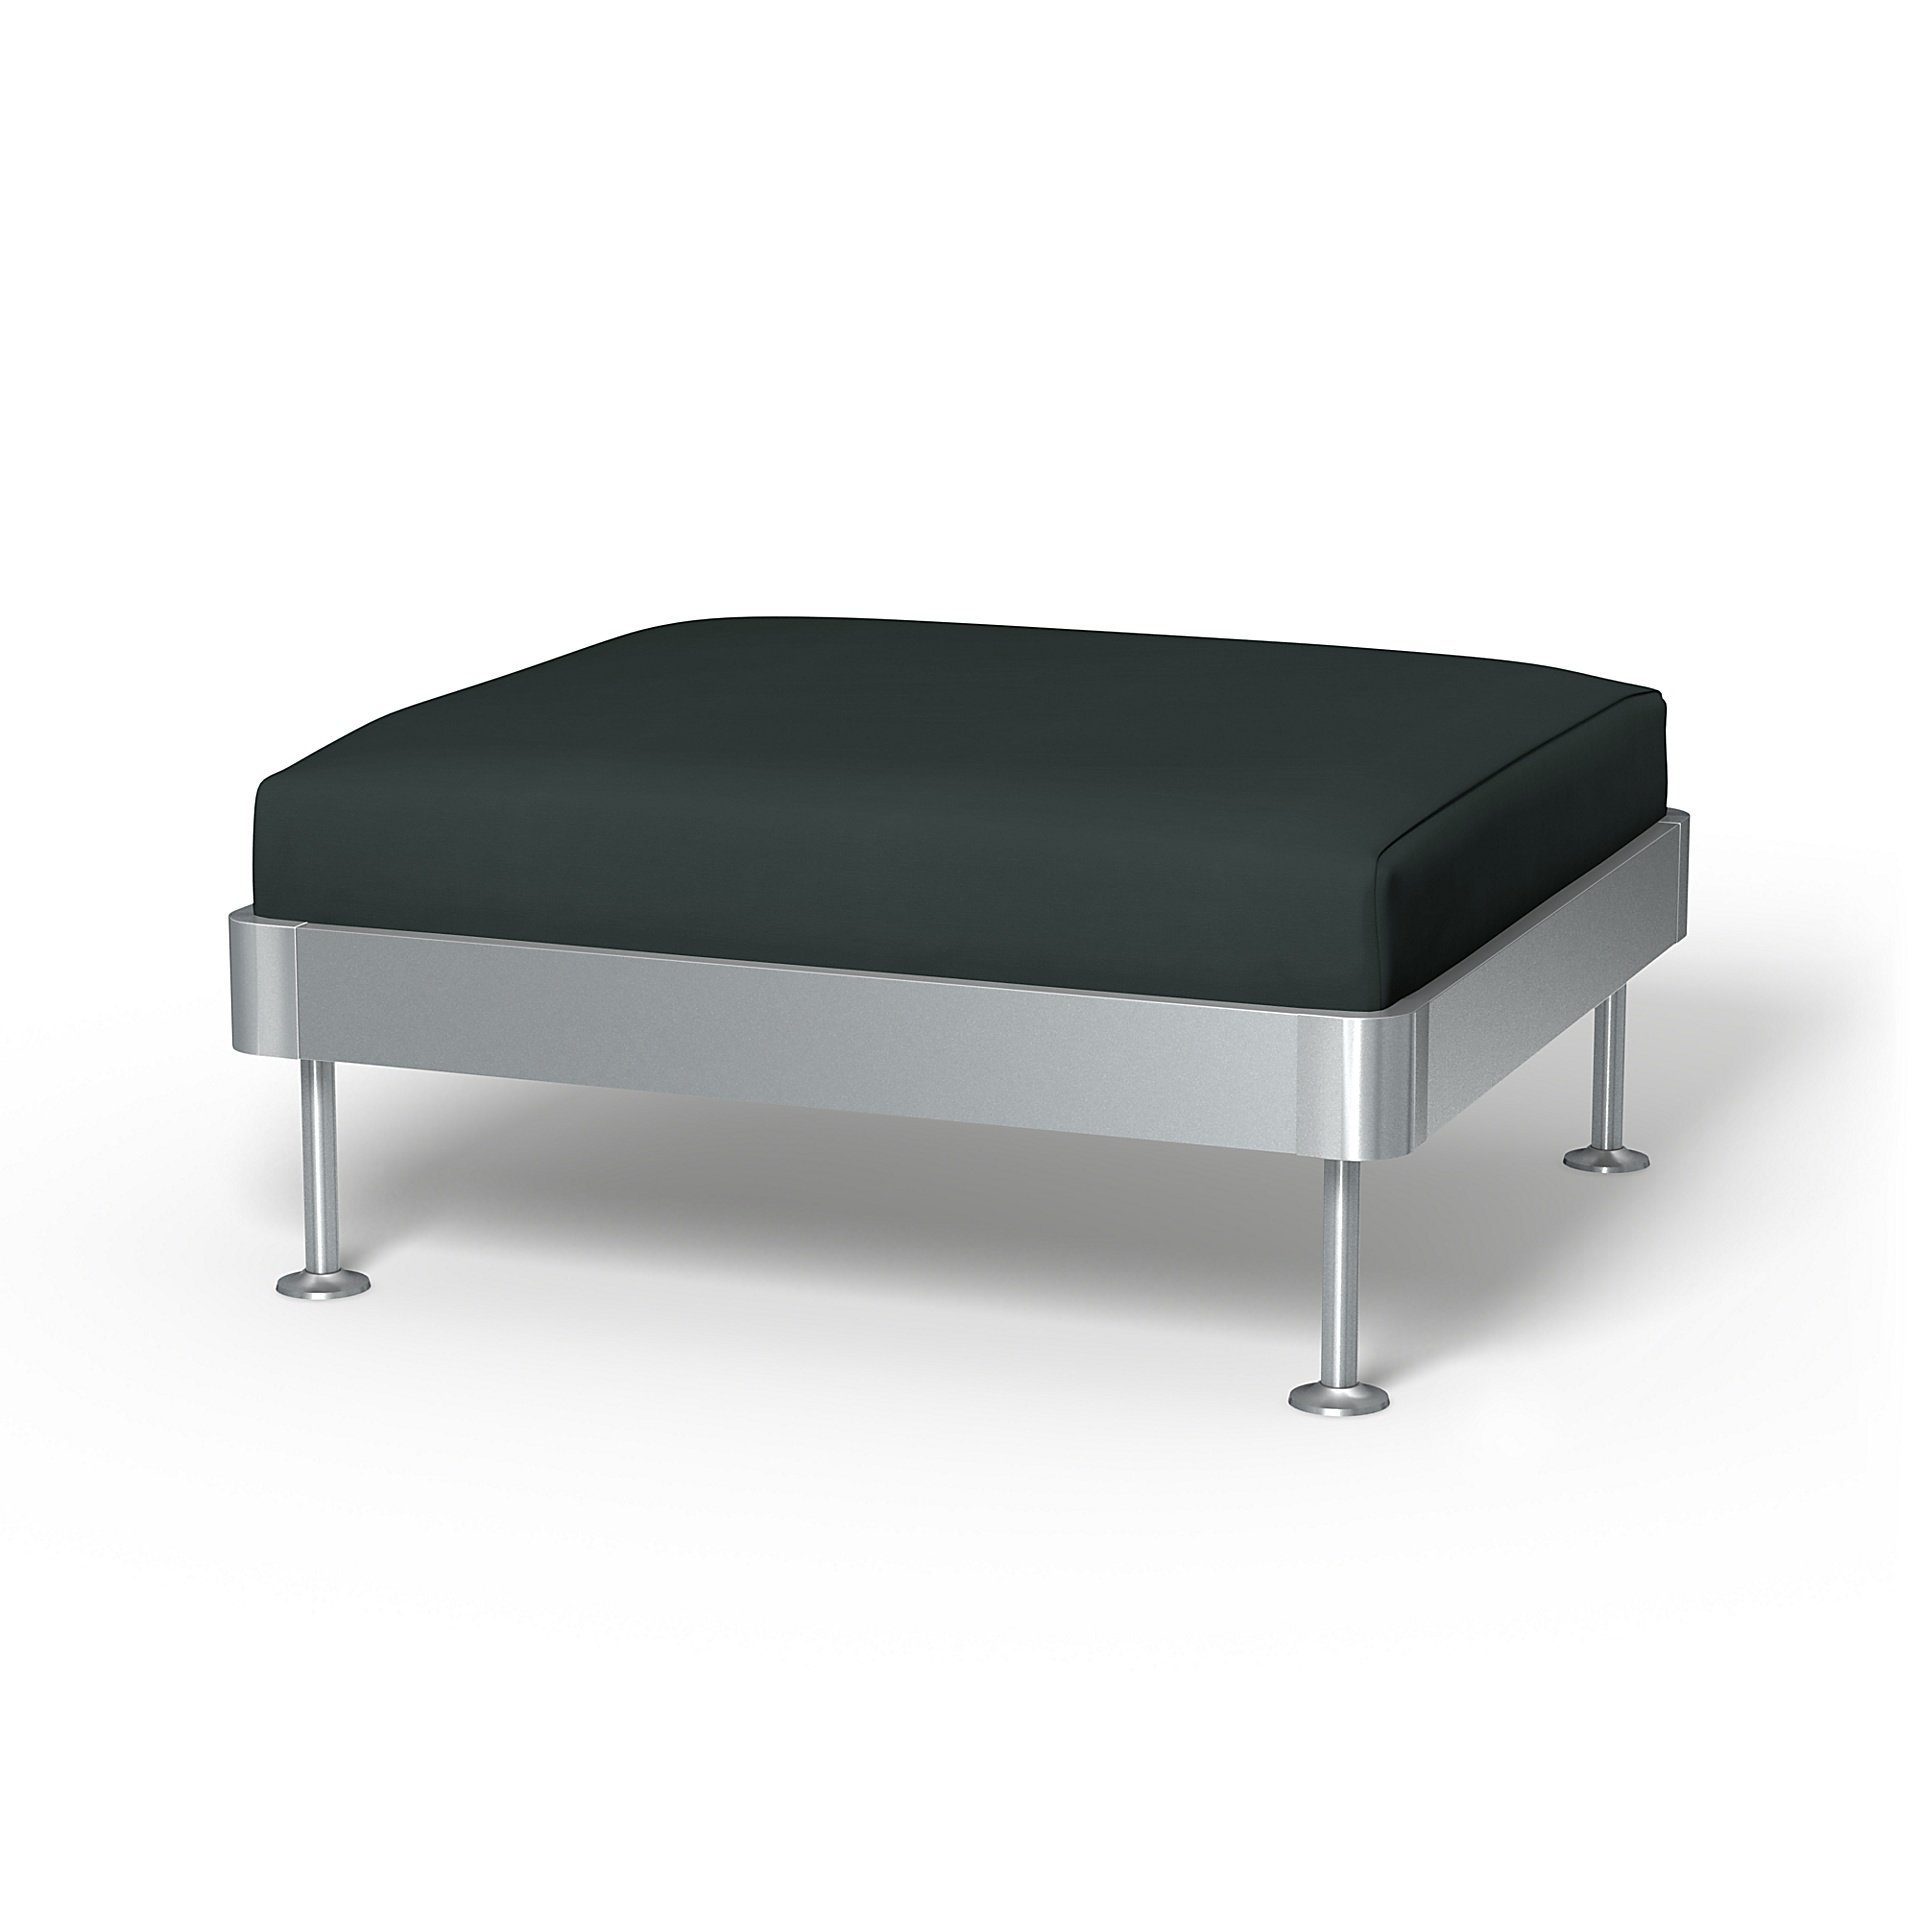 IKEA - Delaktig 1 Seat Platform Cover, Graphite Grey, Cotton - Bemz